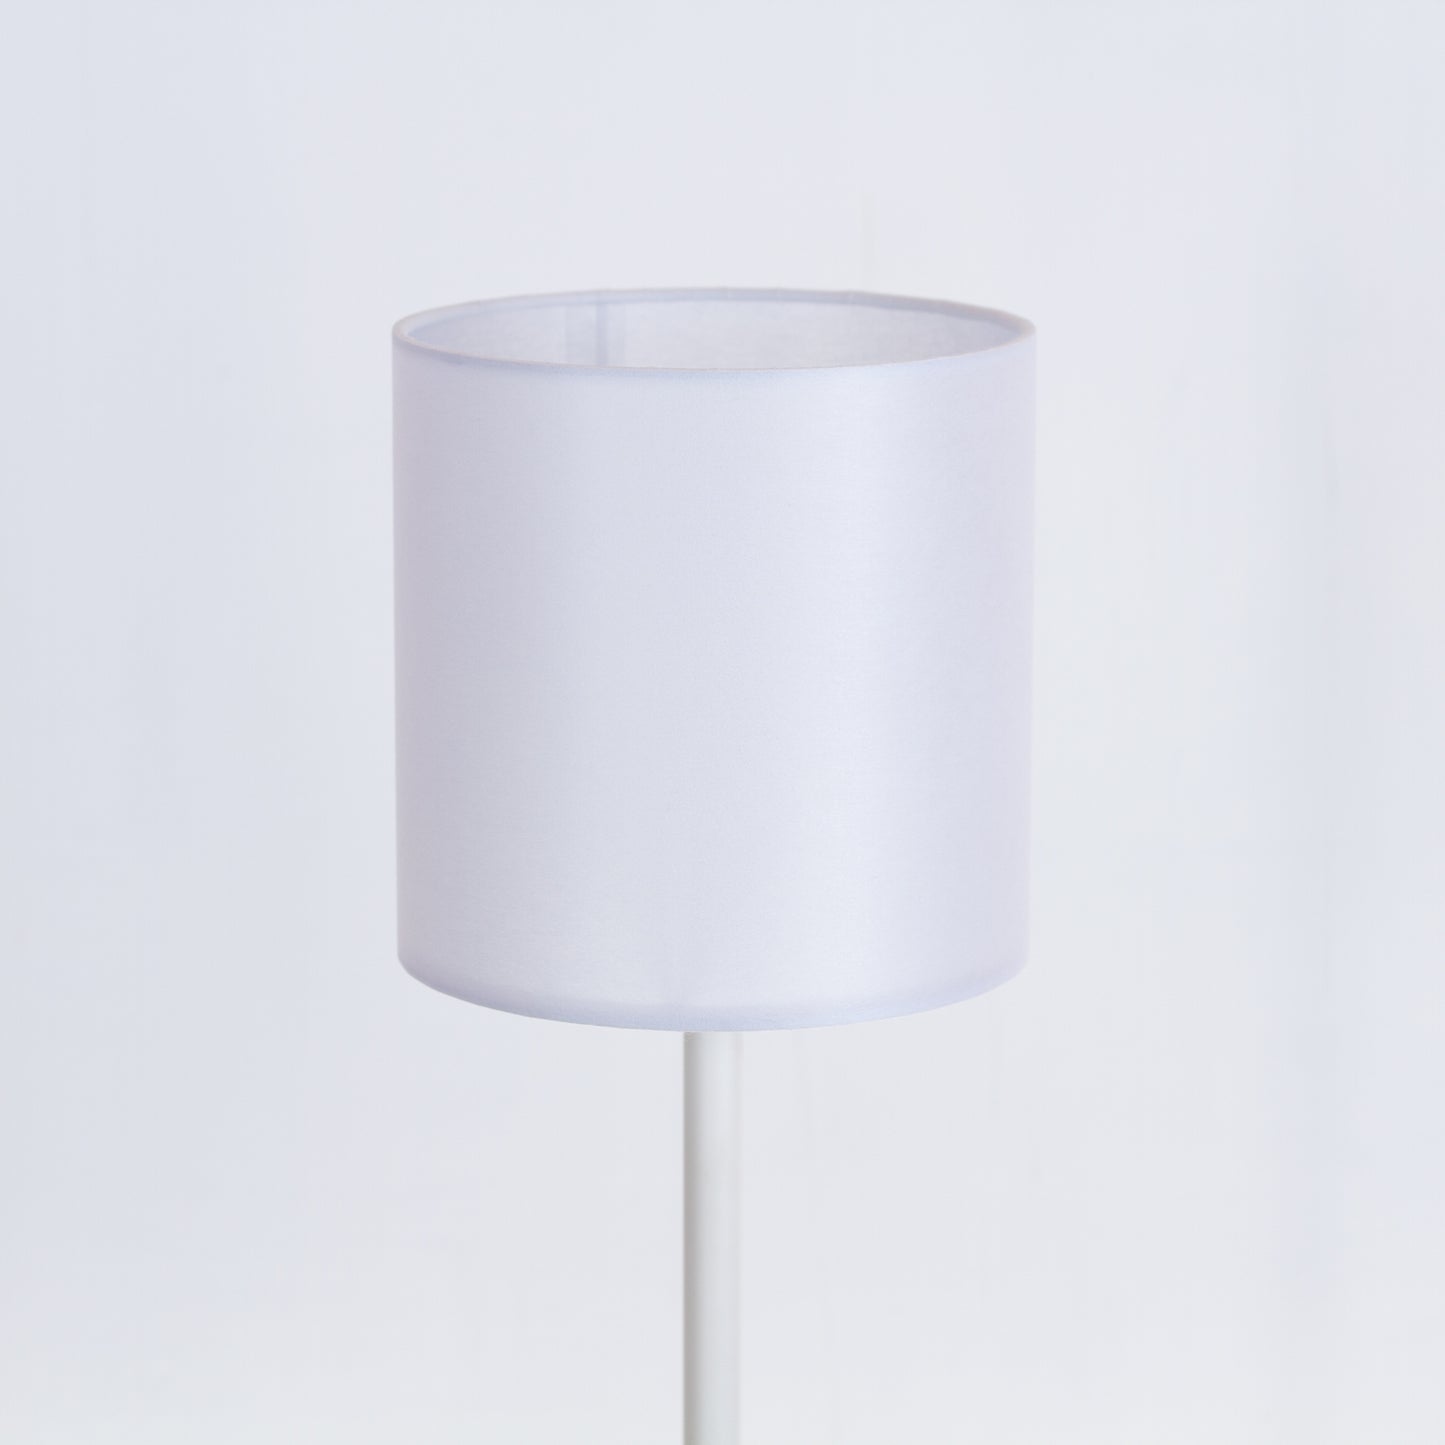 Drum Lamp Shade - P47 ~ White Non Woven Fabric, 20cm(d) x 20cm(h)